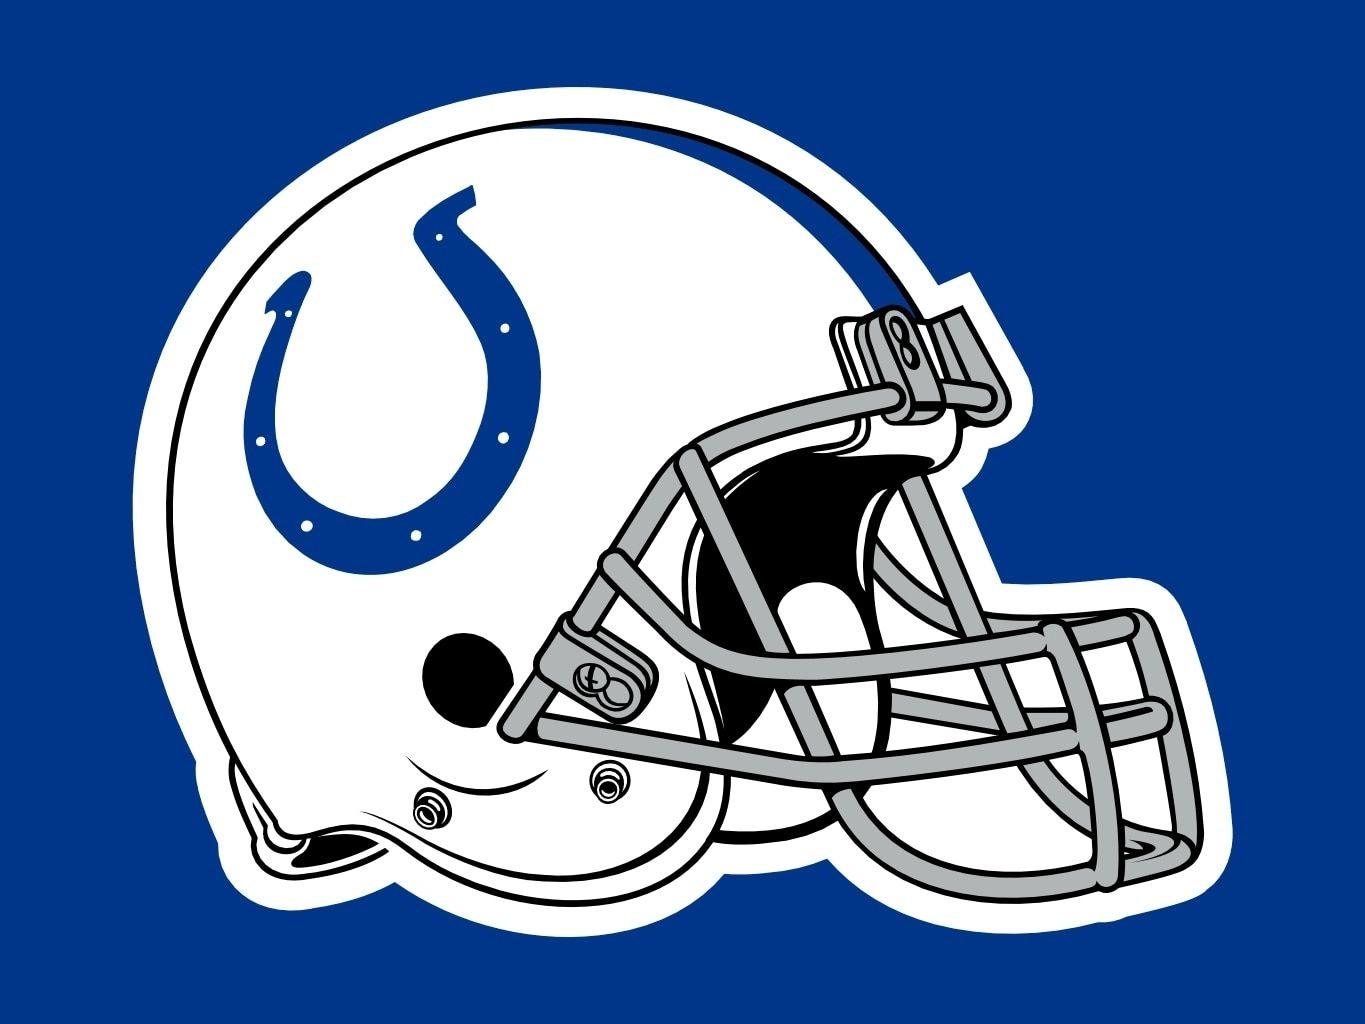 Colts Football Logo - Kokoer Diamond Painting Full Square Round Indianapolis Colts